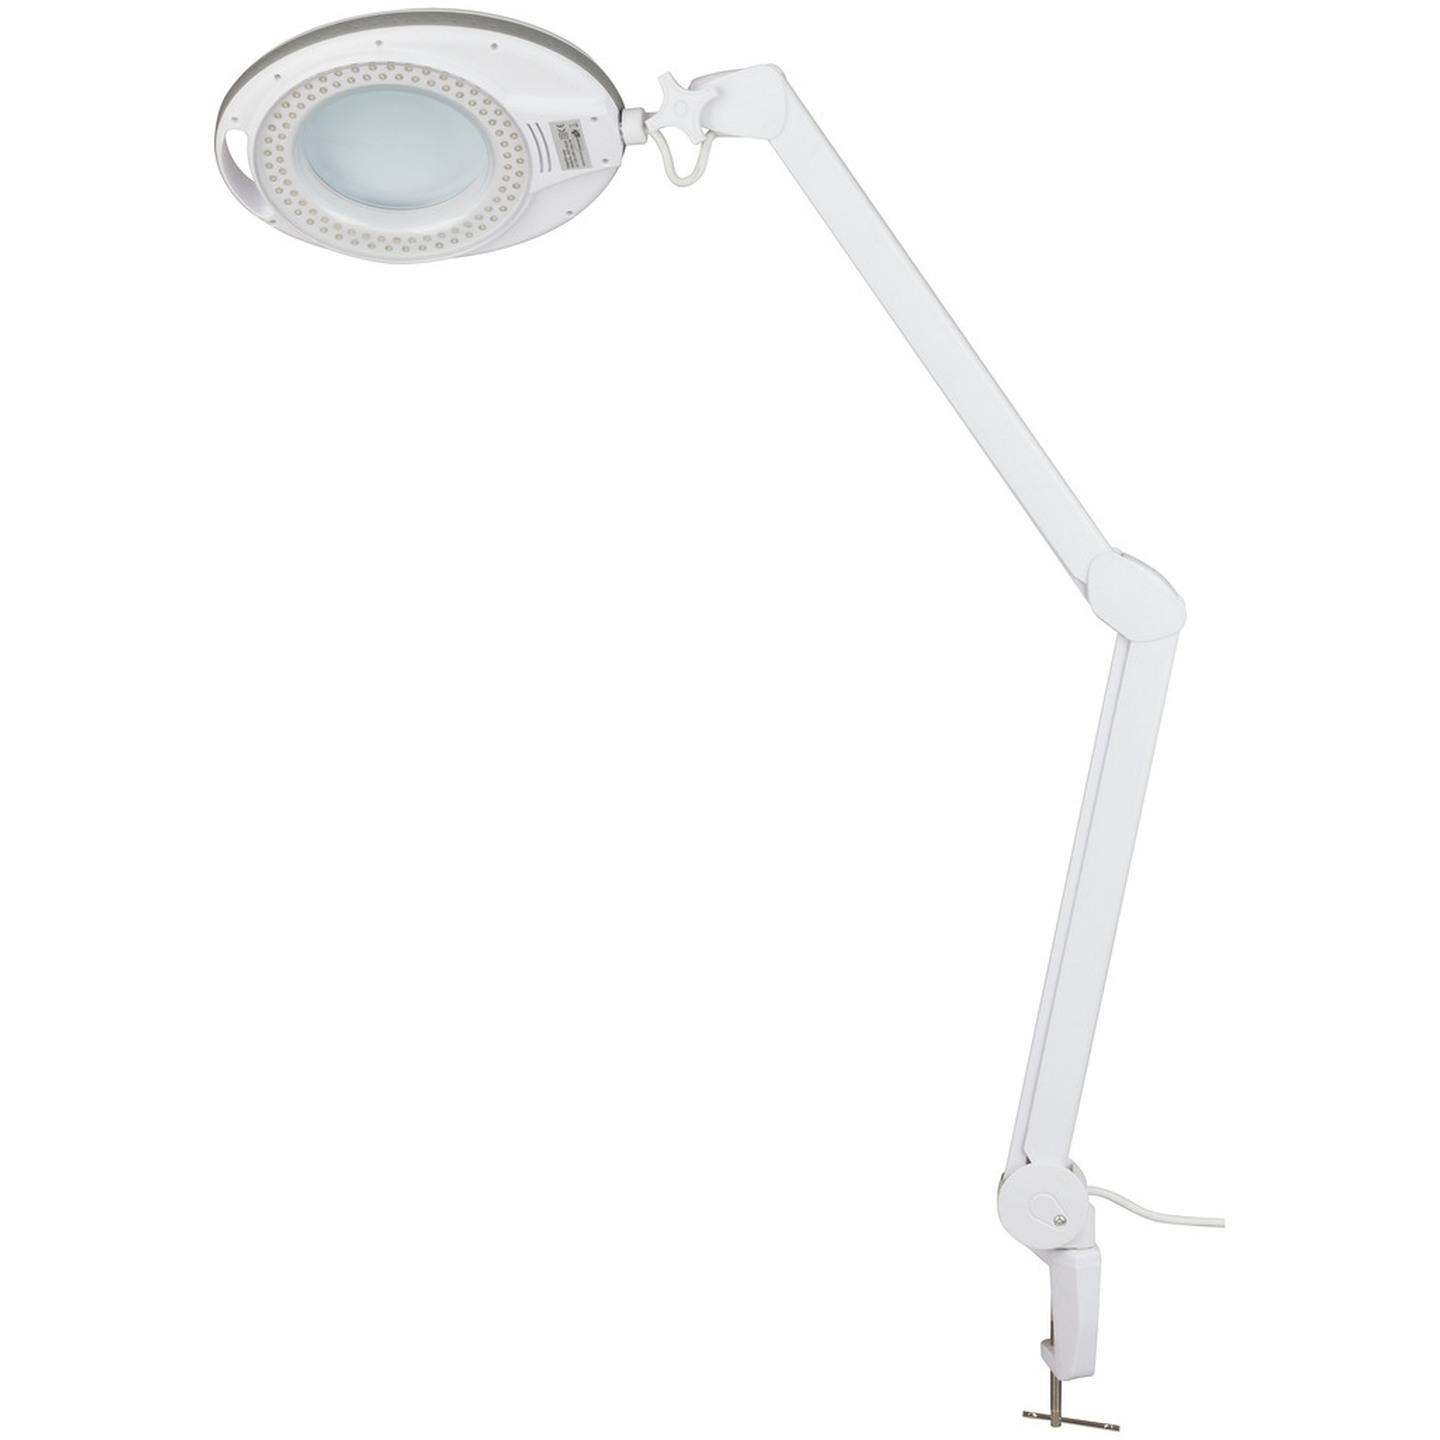 5 Diopter LED Illuminated Magnifying Lamp